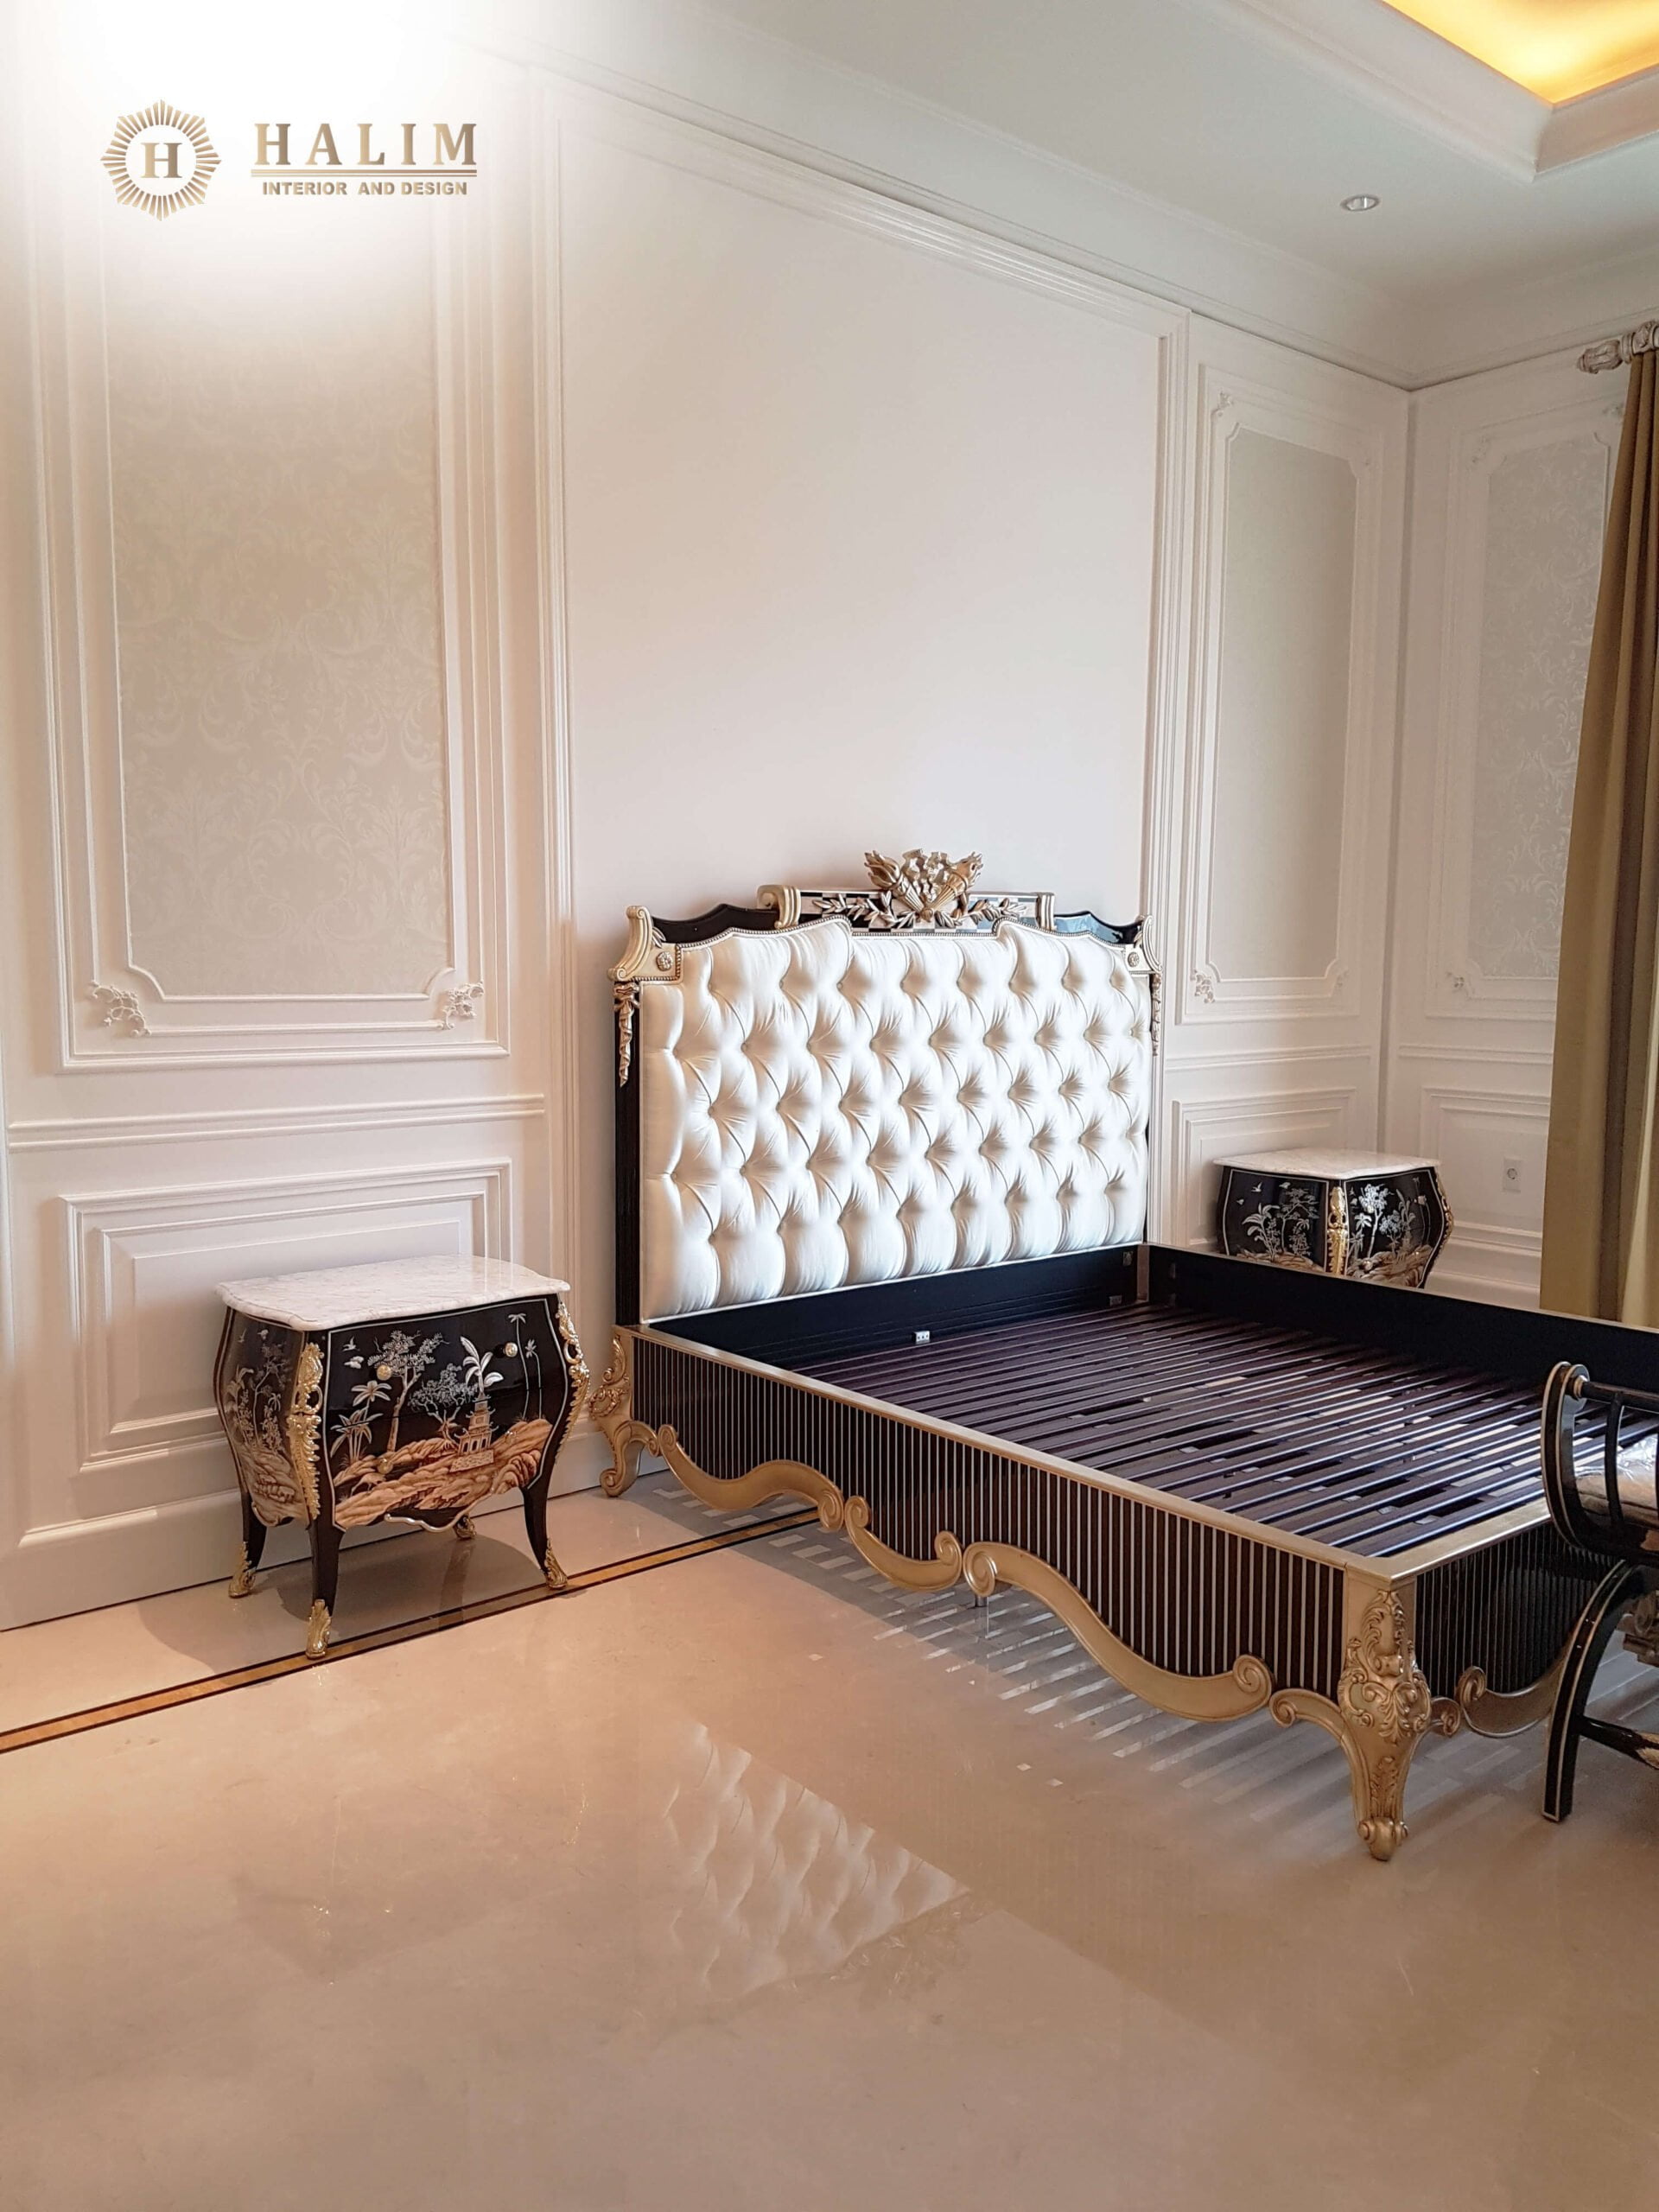 Halim Interior modern furniture contemporer american style minimalist european classic surabaya Kertajaya 5. Master Bedroom lt 1 scaled